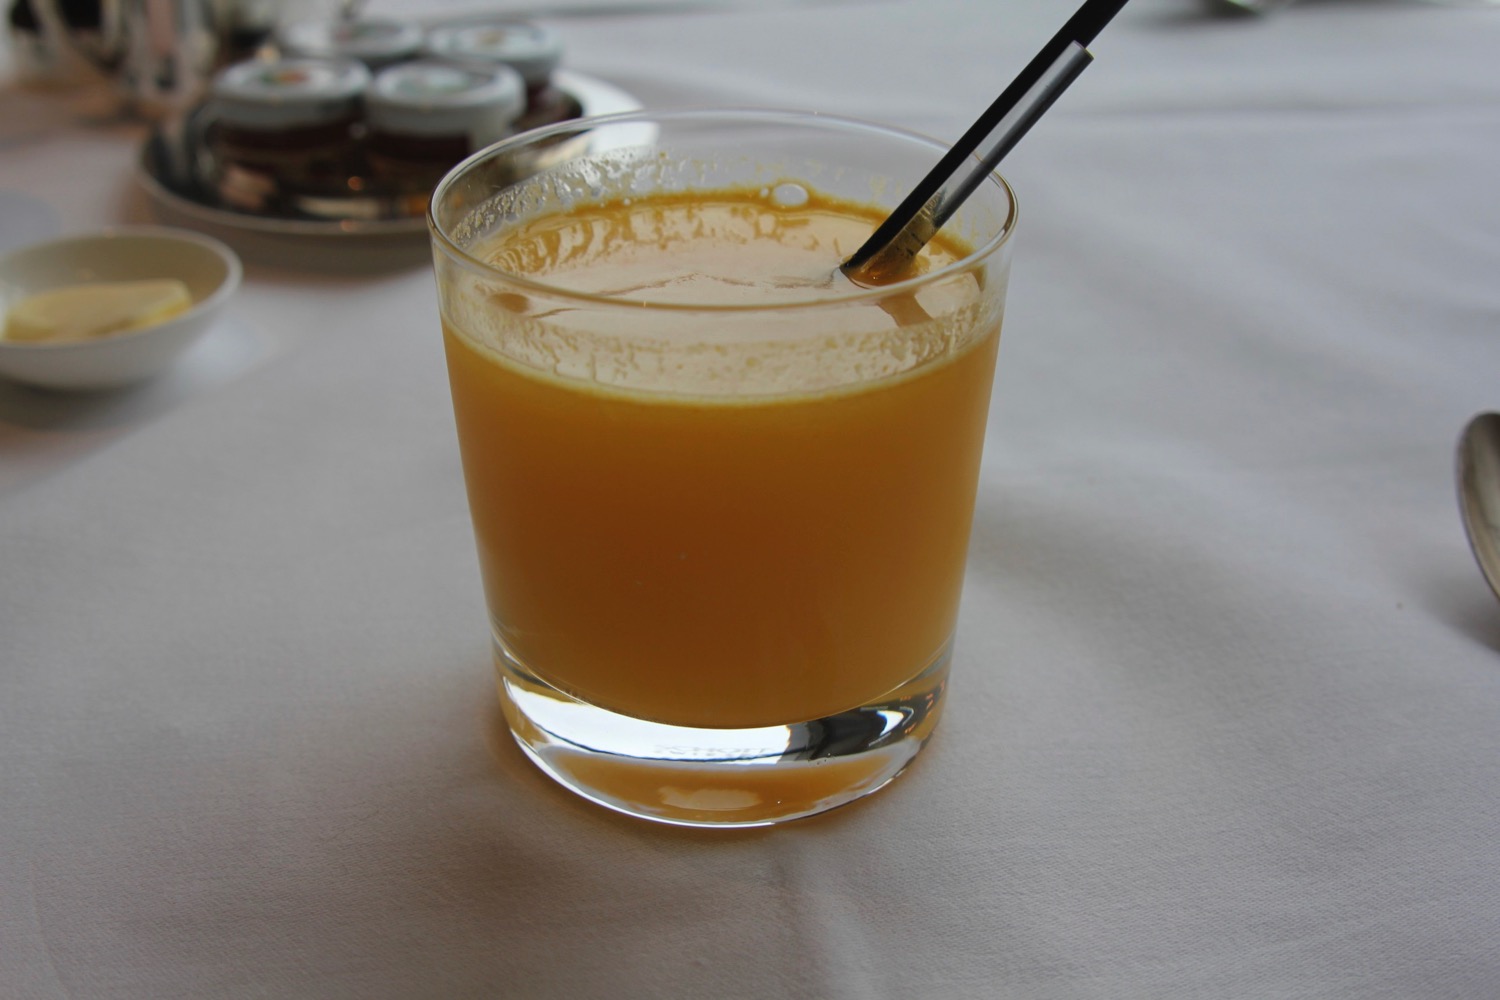 a glass of orange juice with a straw